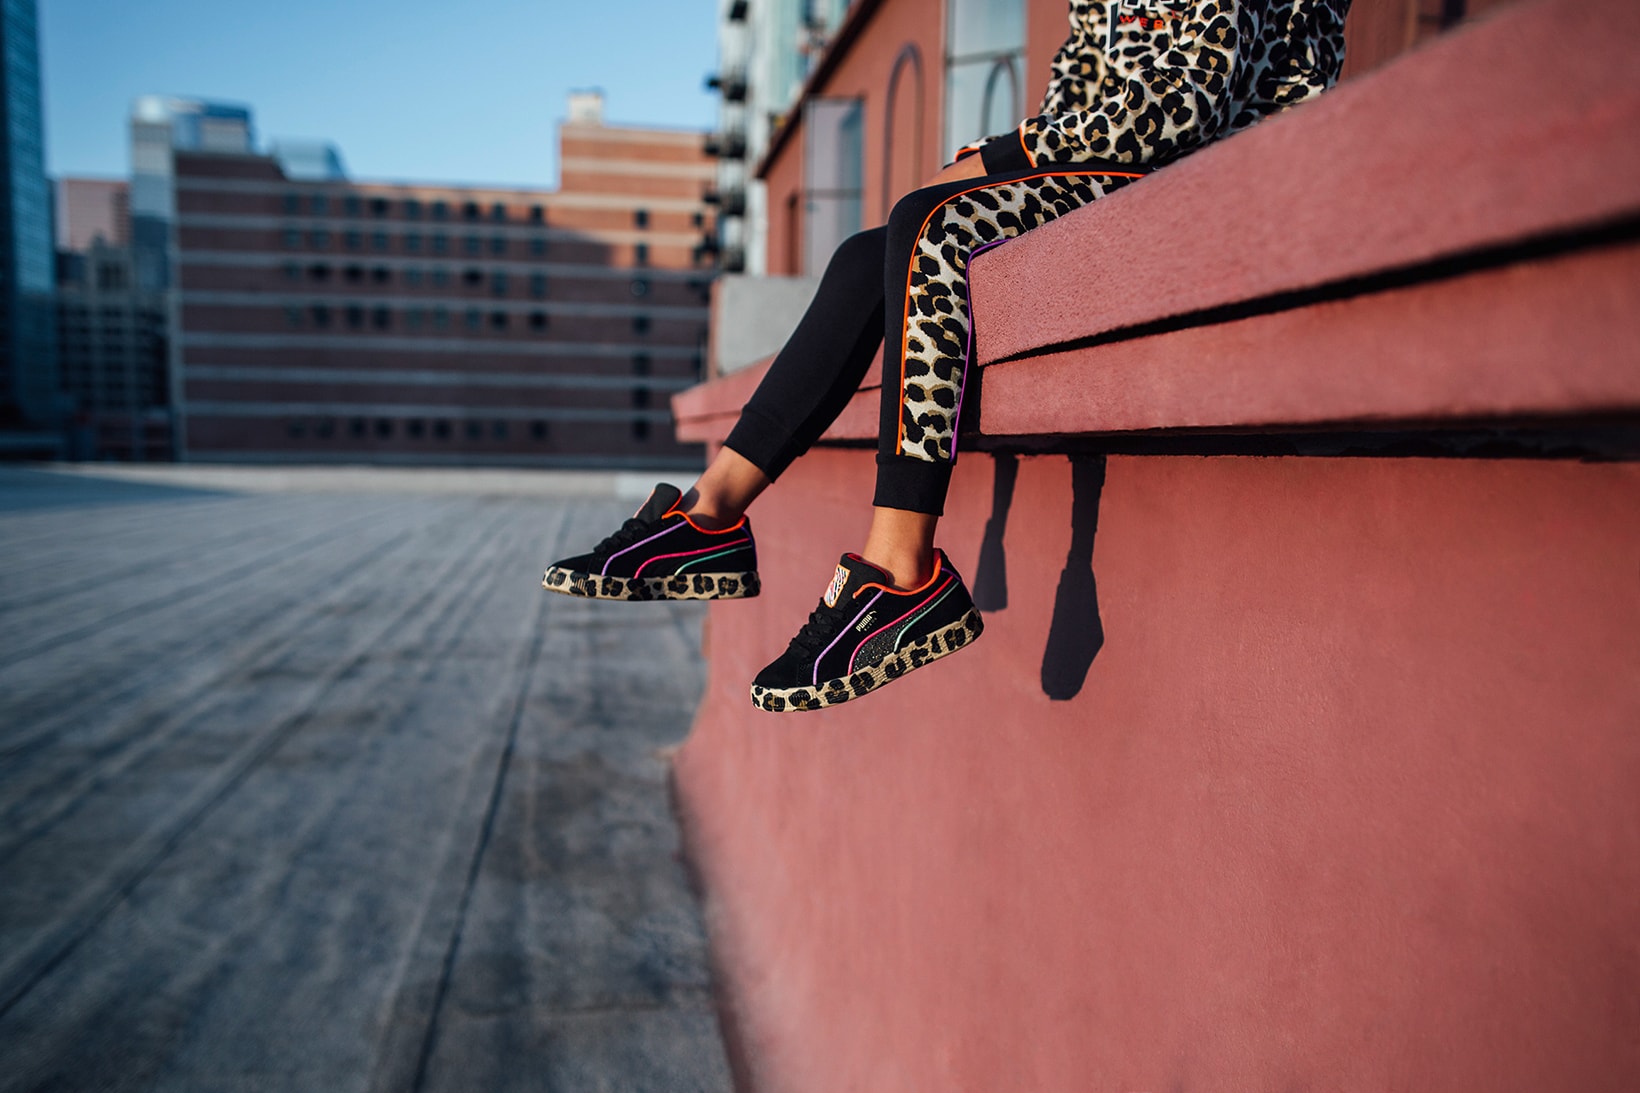 puma sophia webster collaboration suede nova aeon cali sneakers sweatshirt sweatpants apparel footwear shoes 